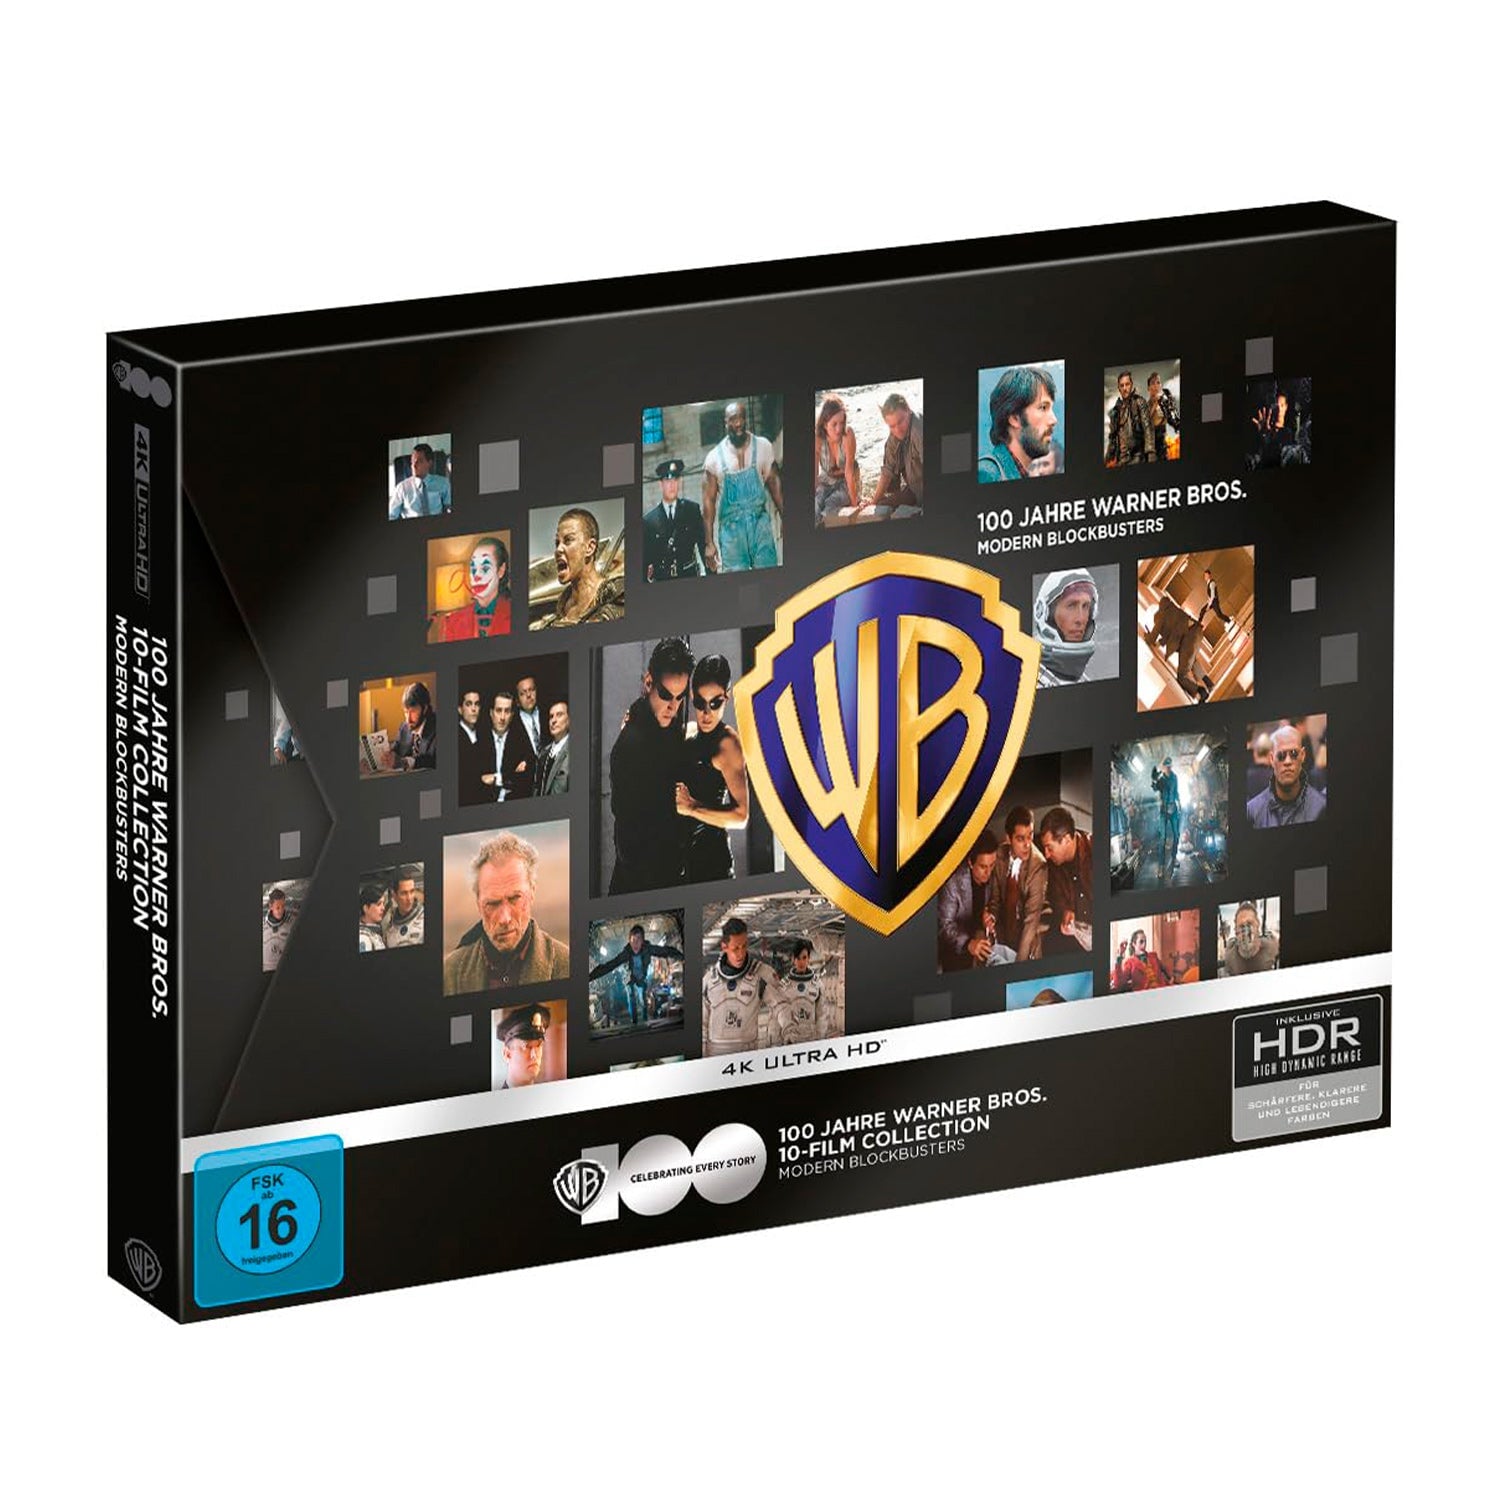 100 Years of Warner Bros. - Современные блокбастеры: Коллекция 10 фильмов (4K UHD Blu-ray)